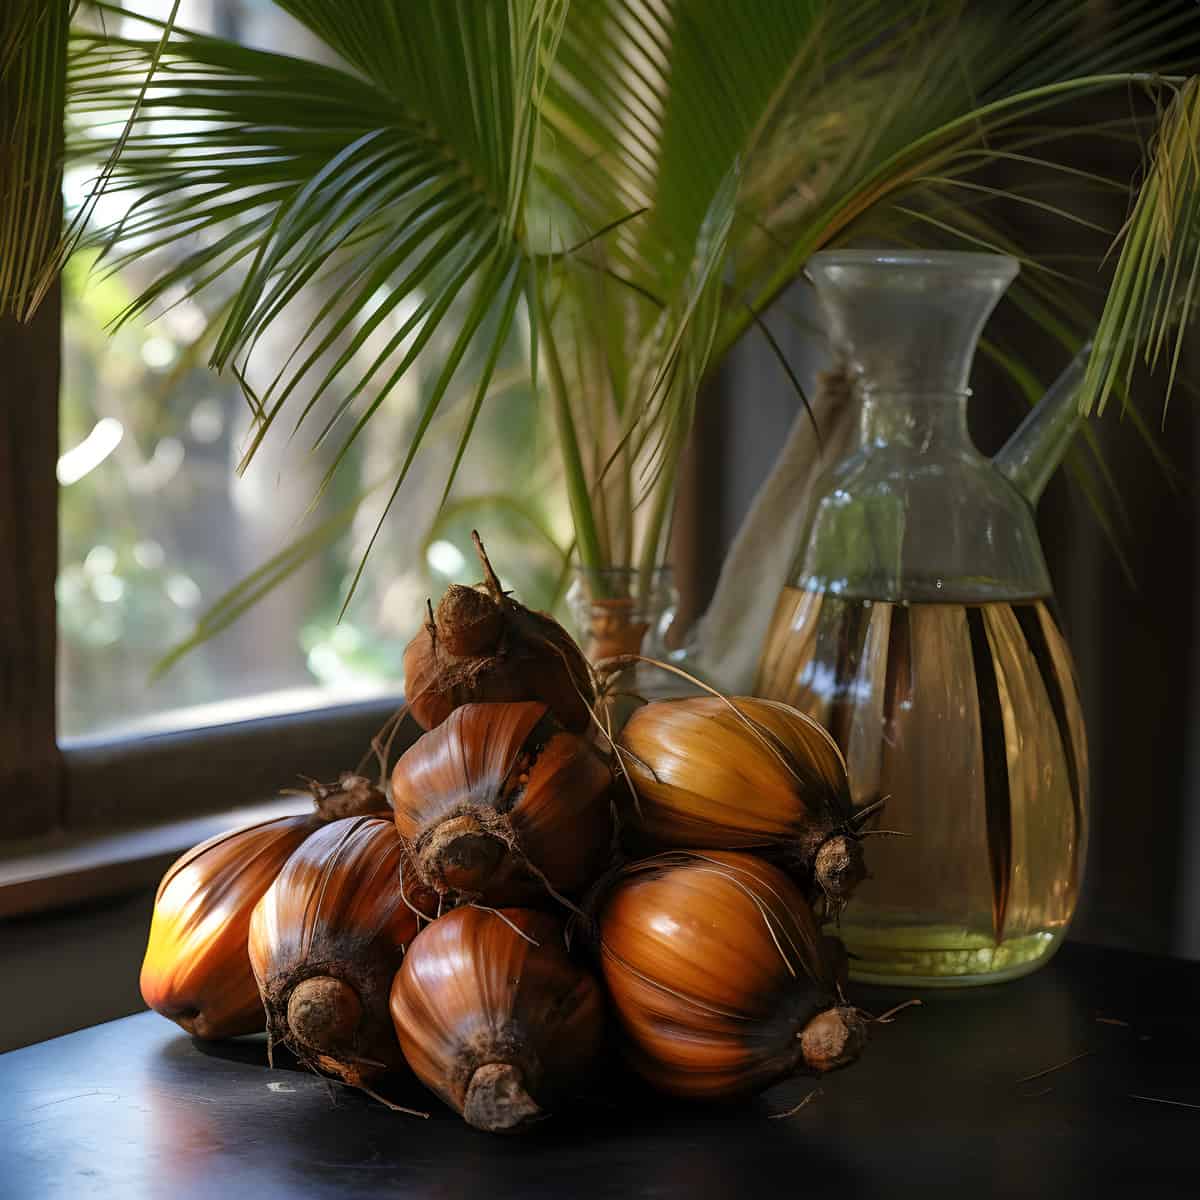 Nipa Palm Fruit on a kitchen counter